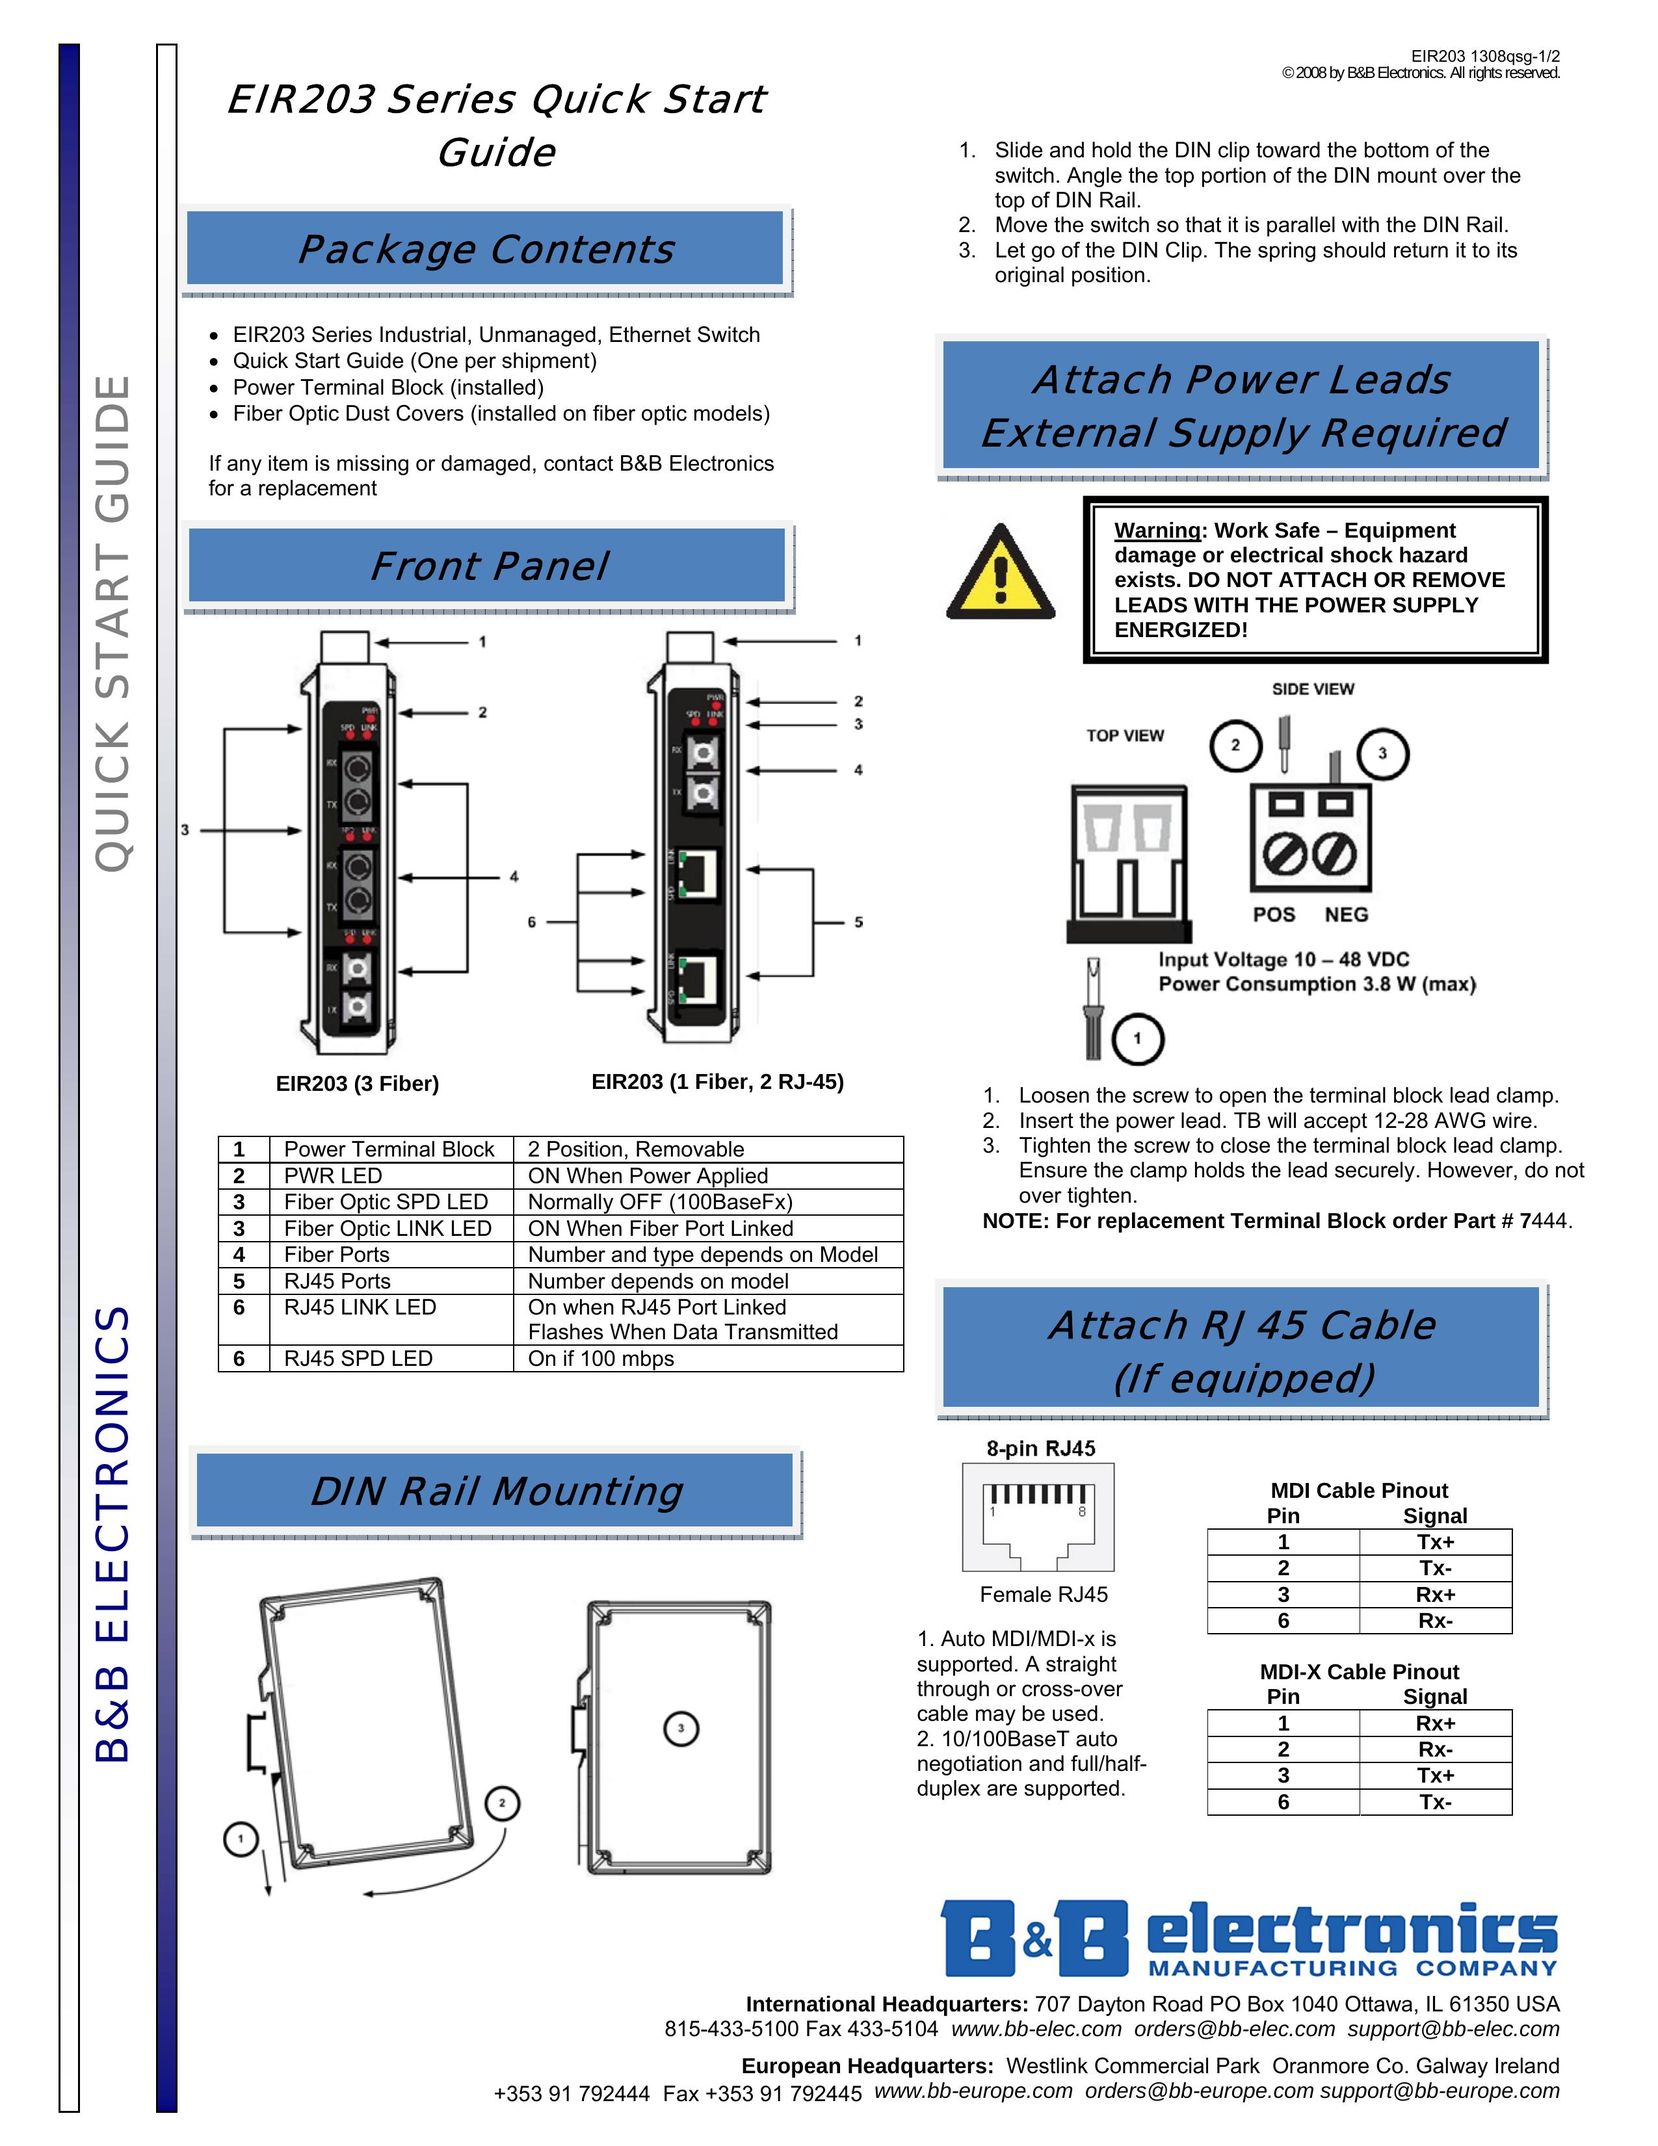 B&B Electronics EIR203-2ST Network Card User Manual